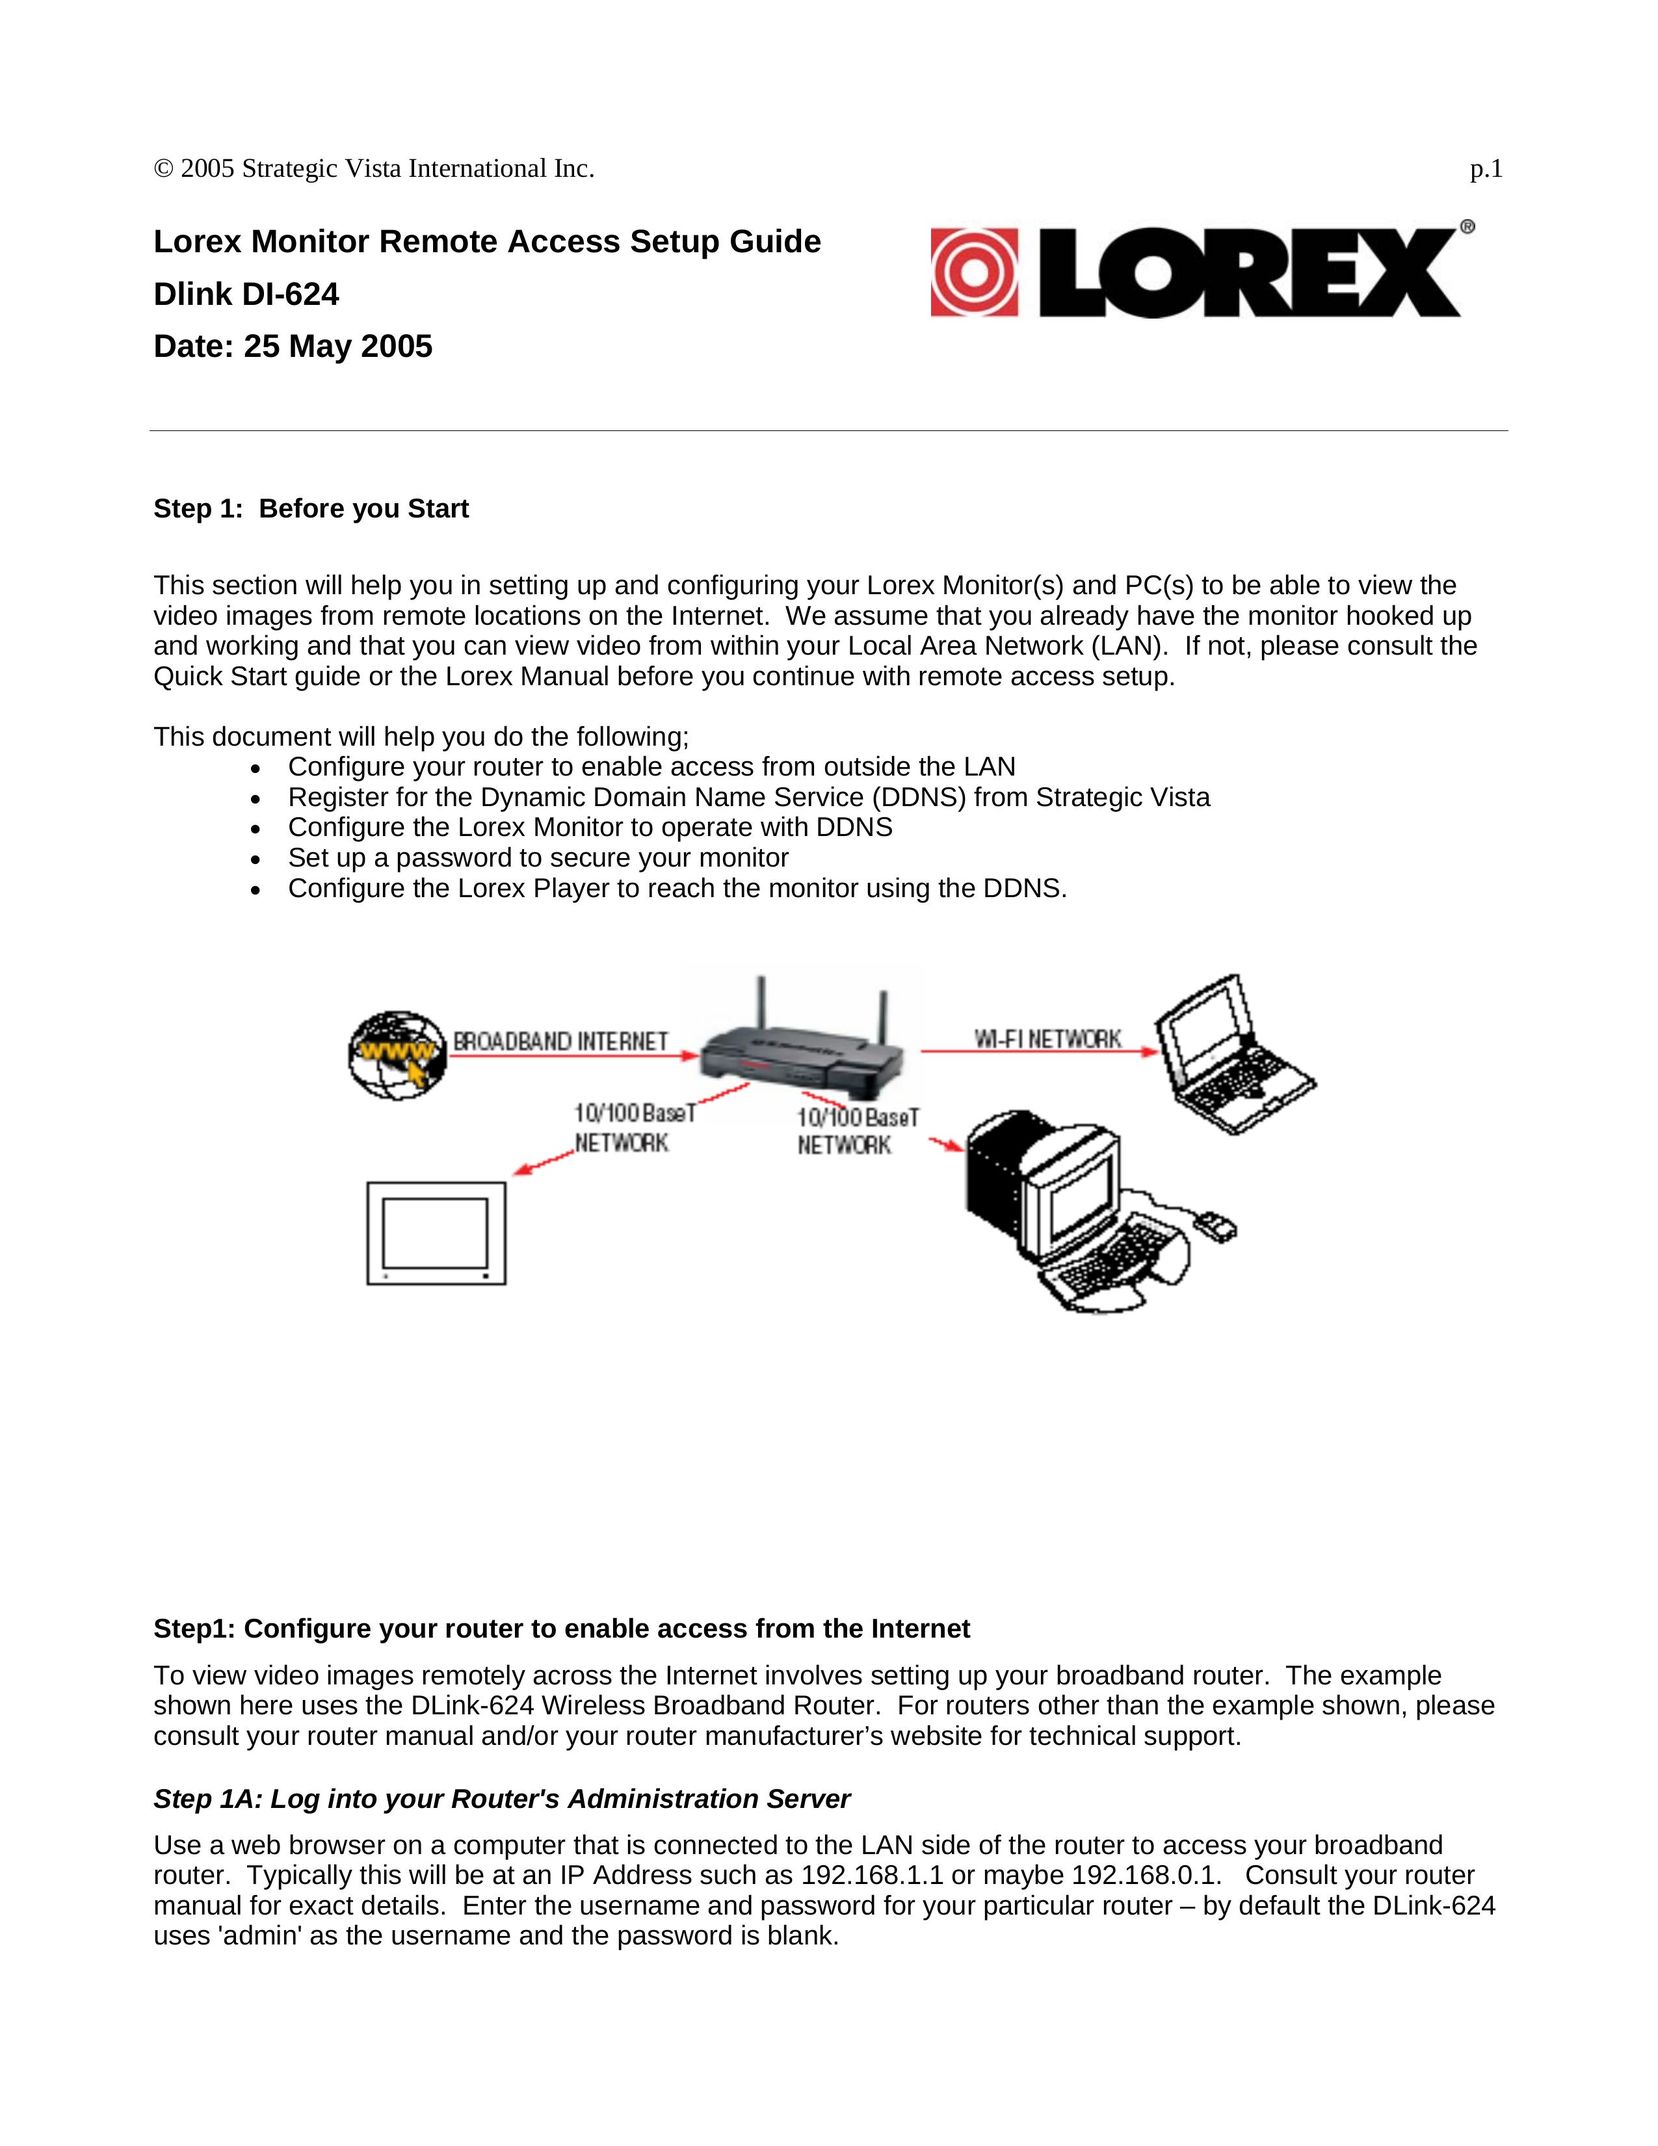 LOREX Technology DI-624 Network Router User Manual